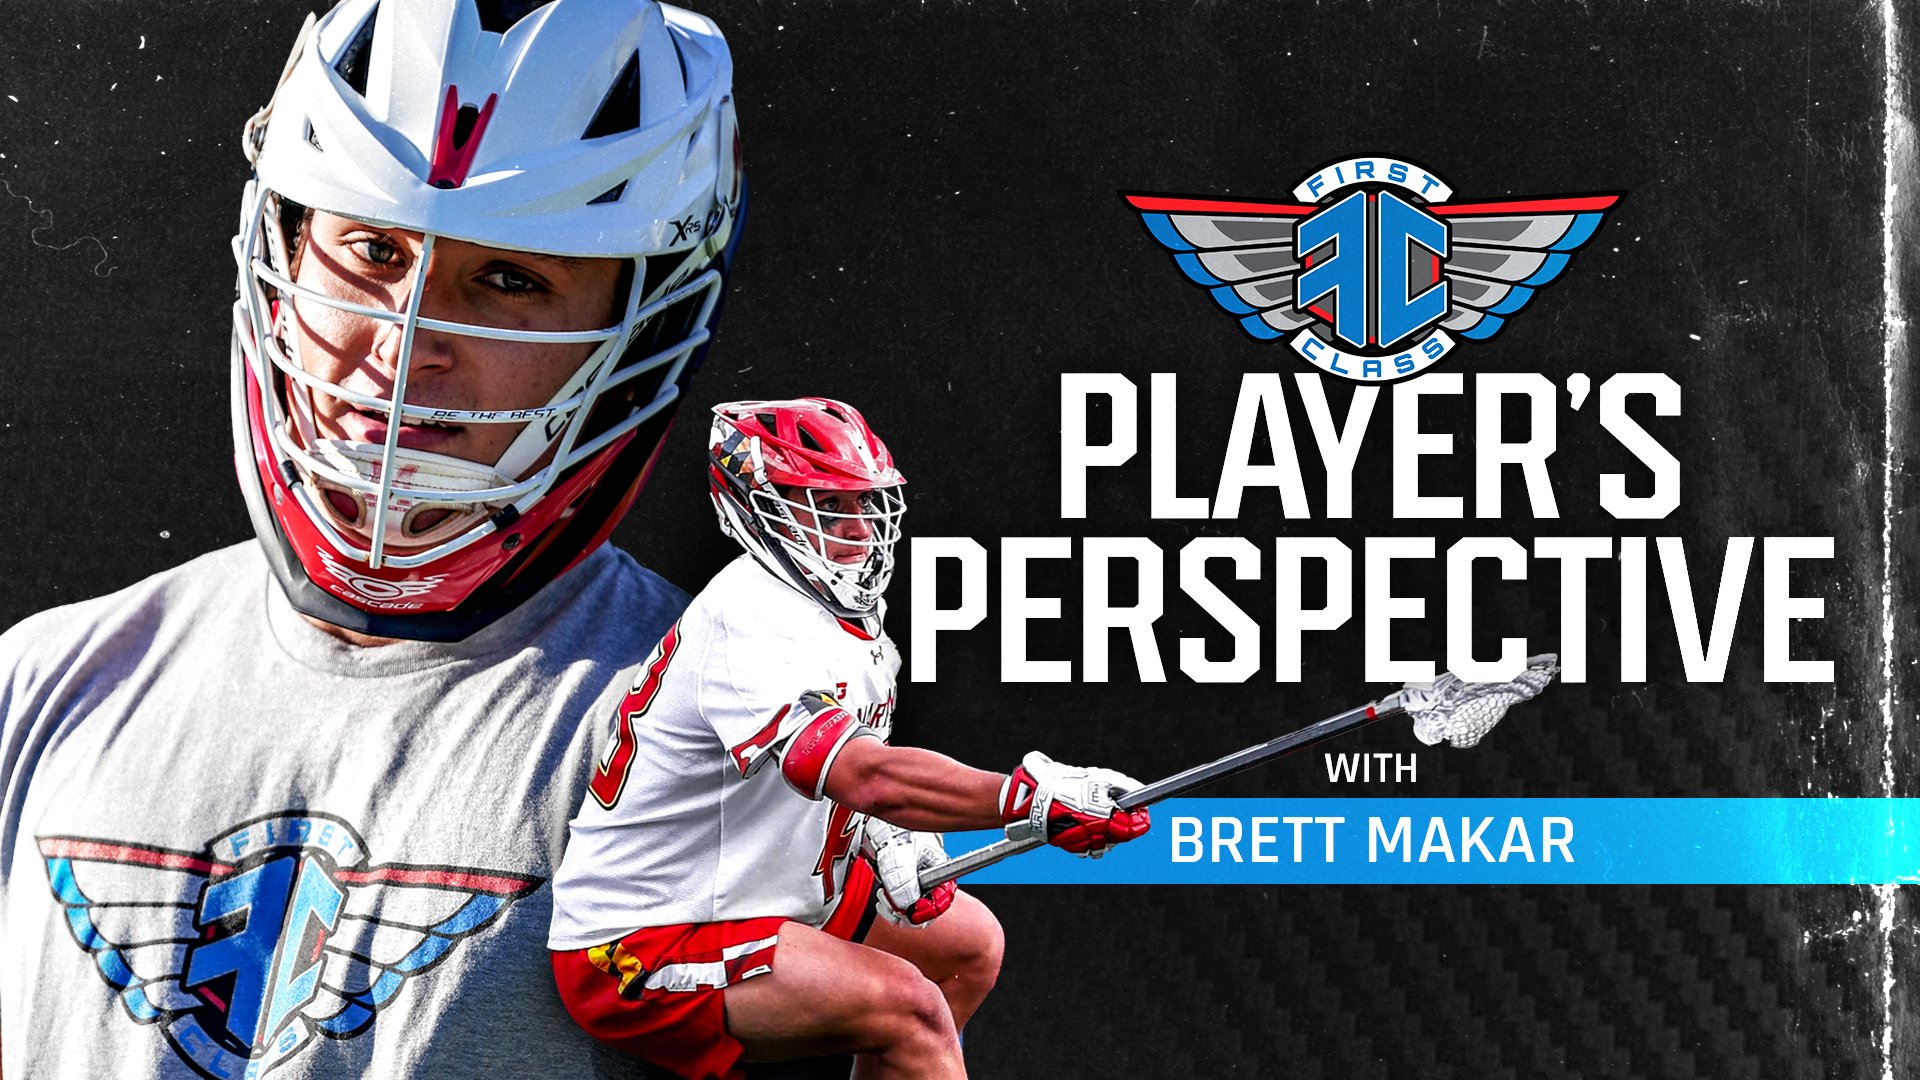 Brett Makar, First Class Lacrosse